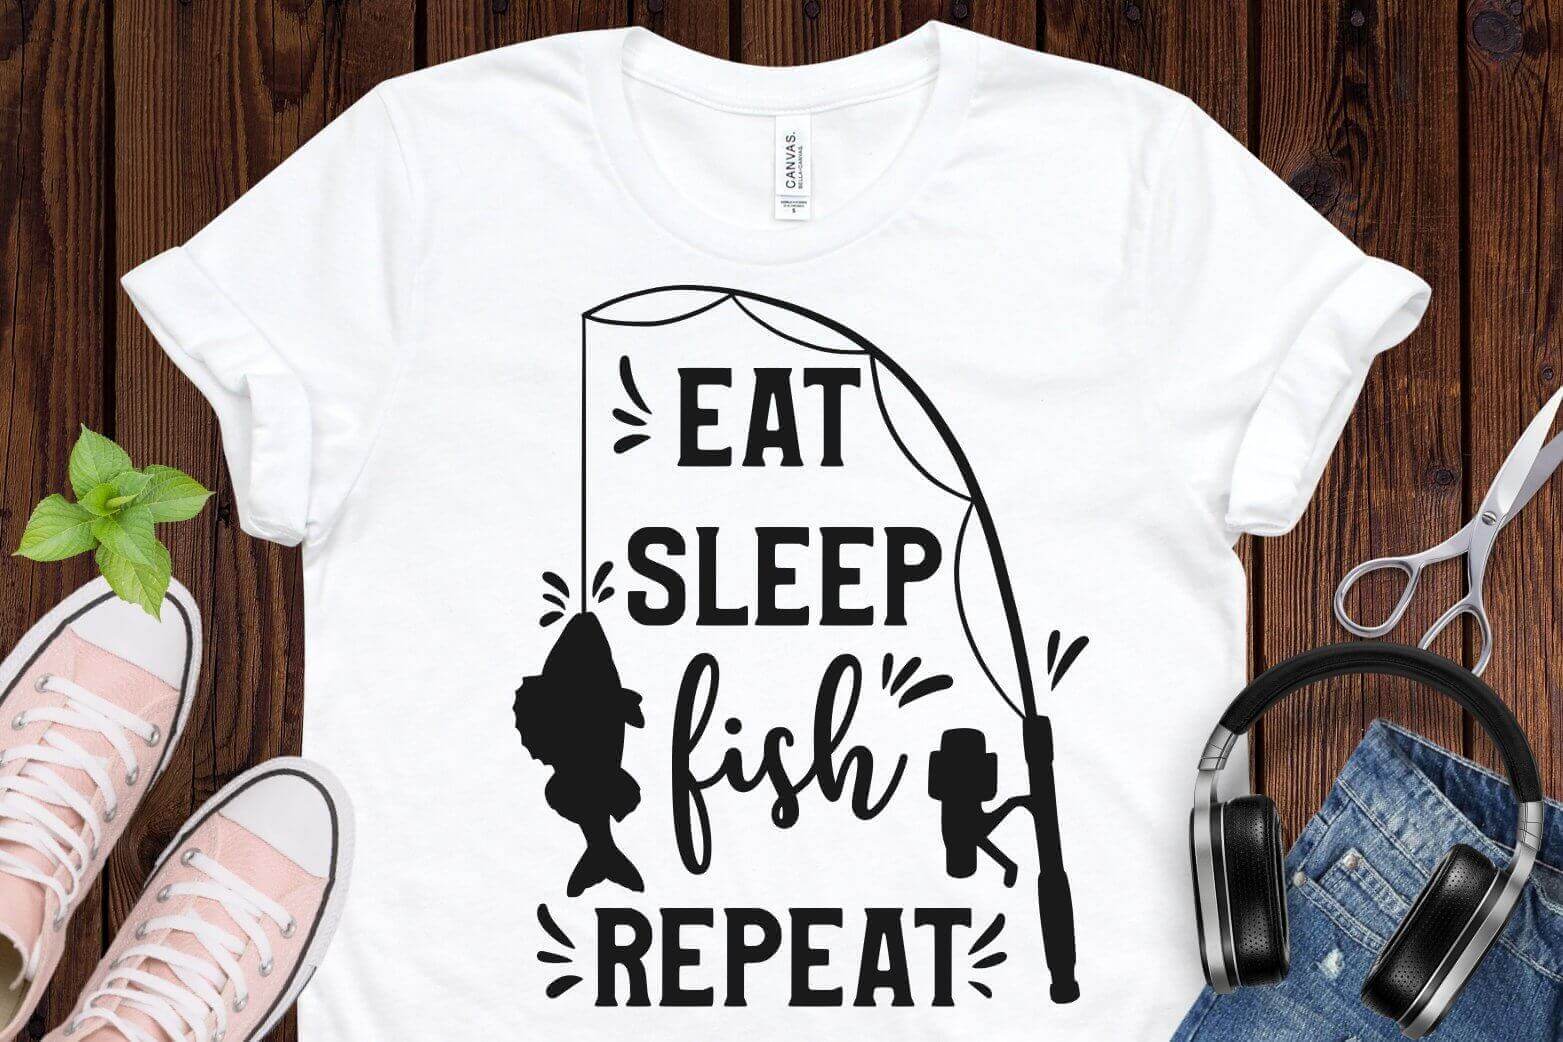 Eat Sleep Fish Repeat.